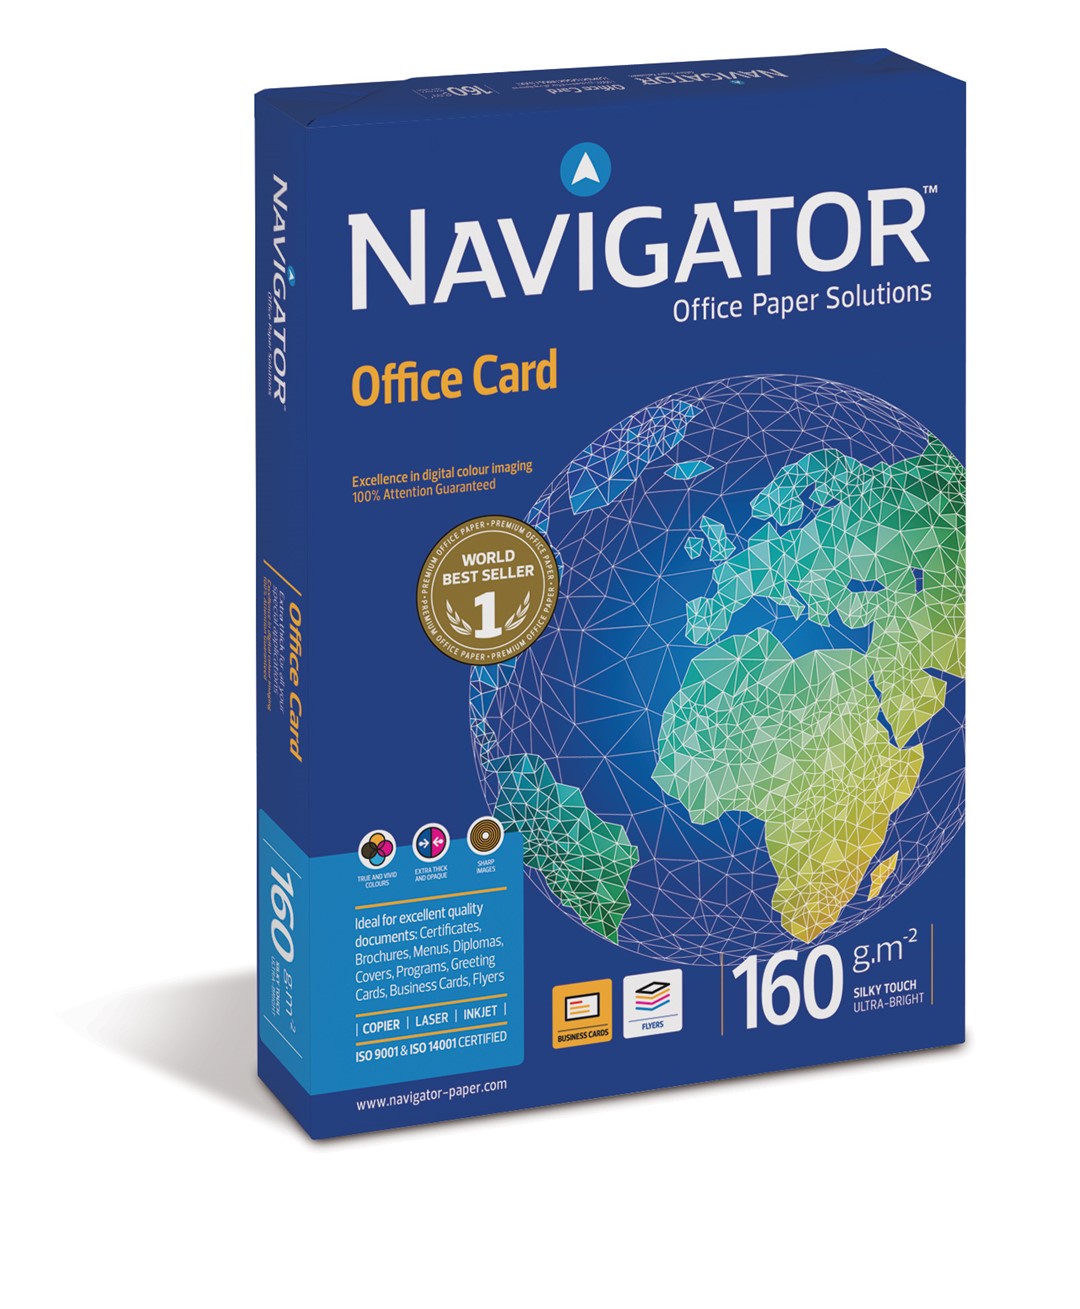 Papier ksero biały A4/160g 250 arkuszy Navigator Office Card